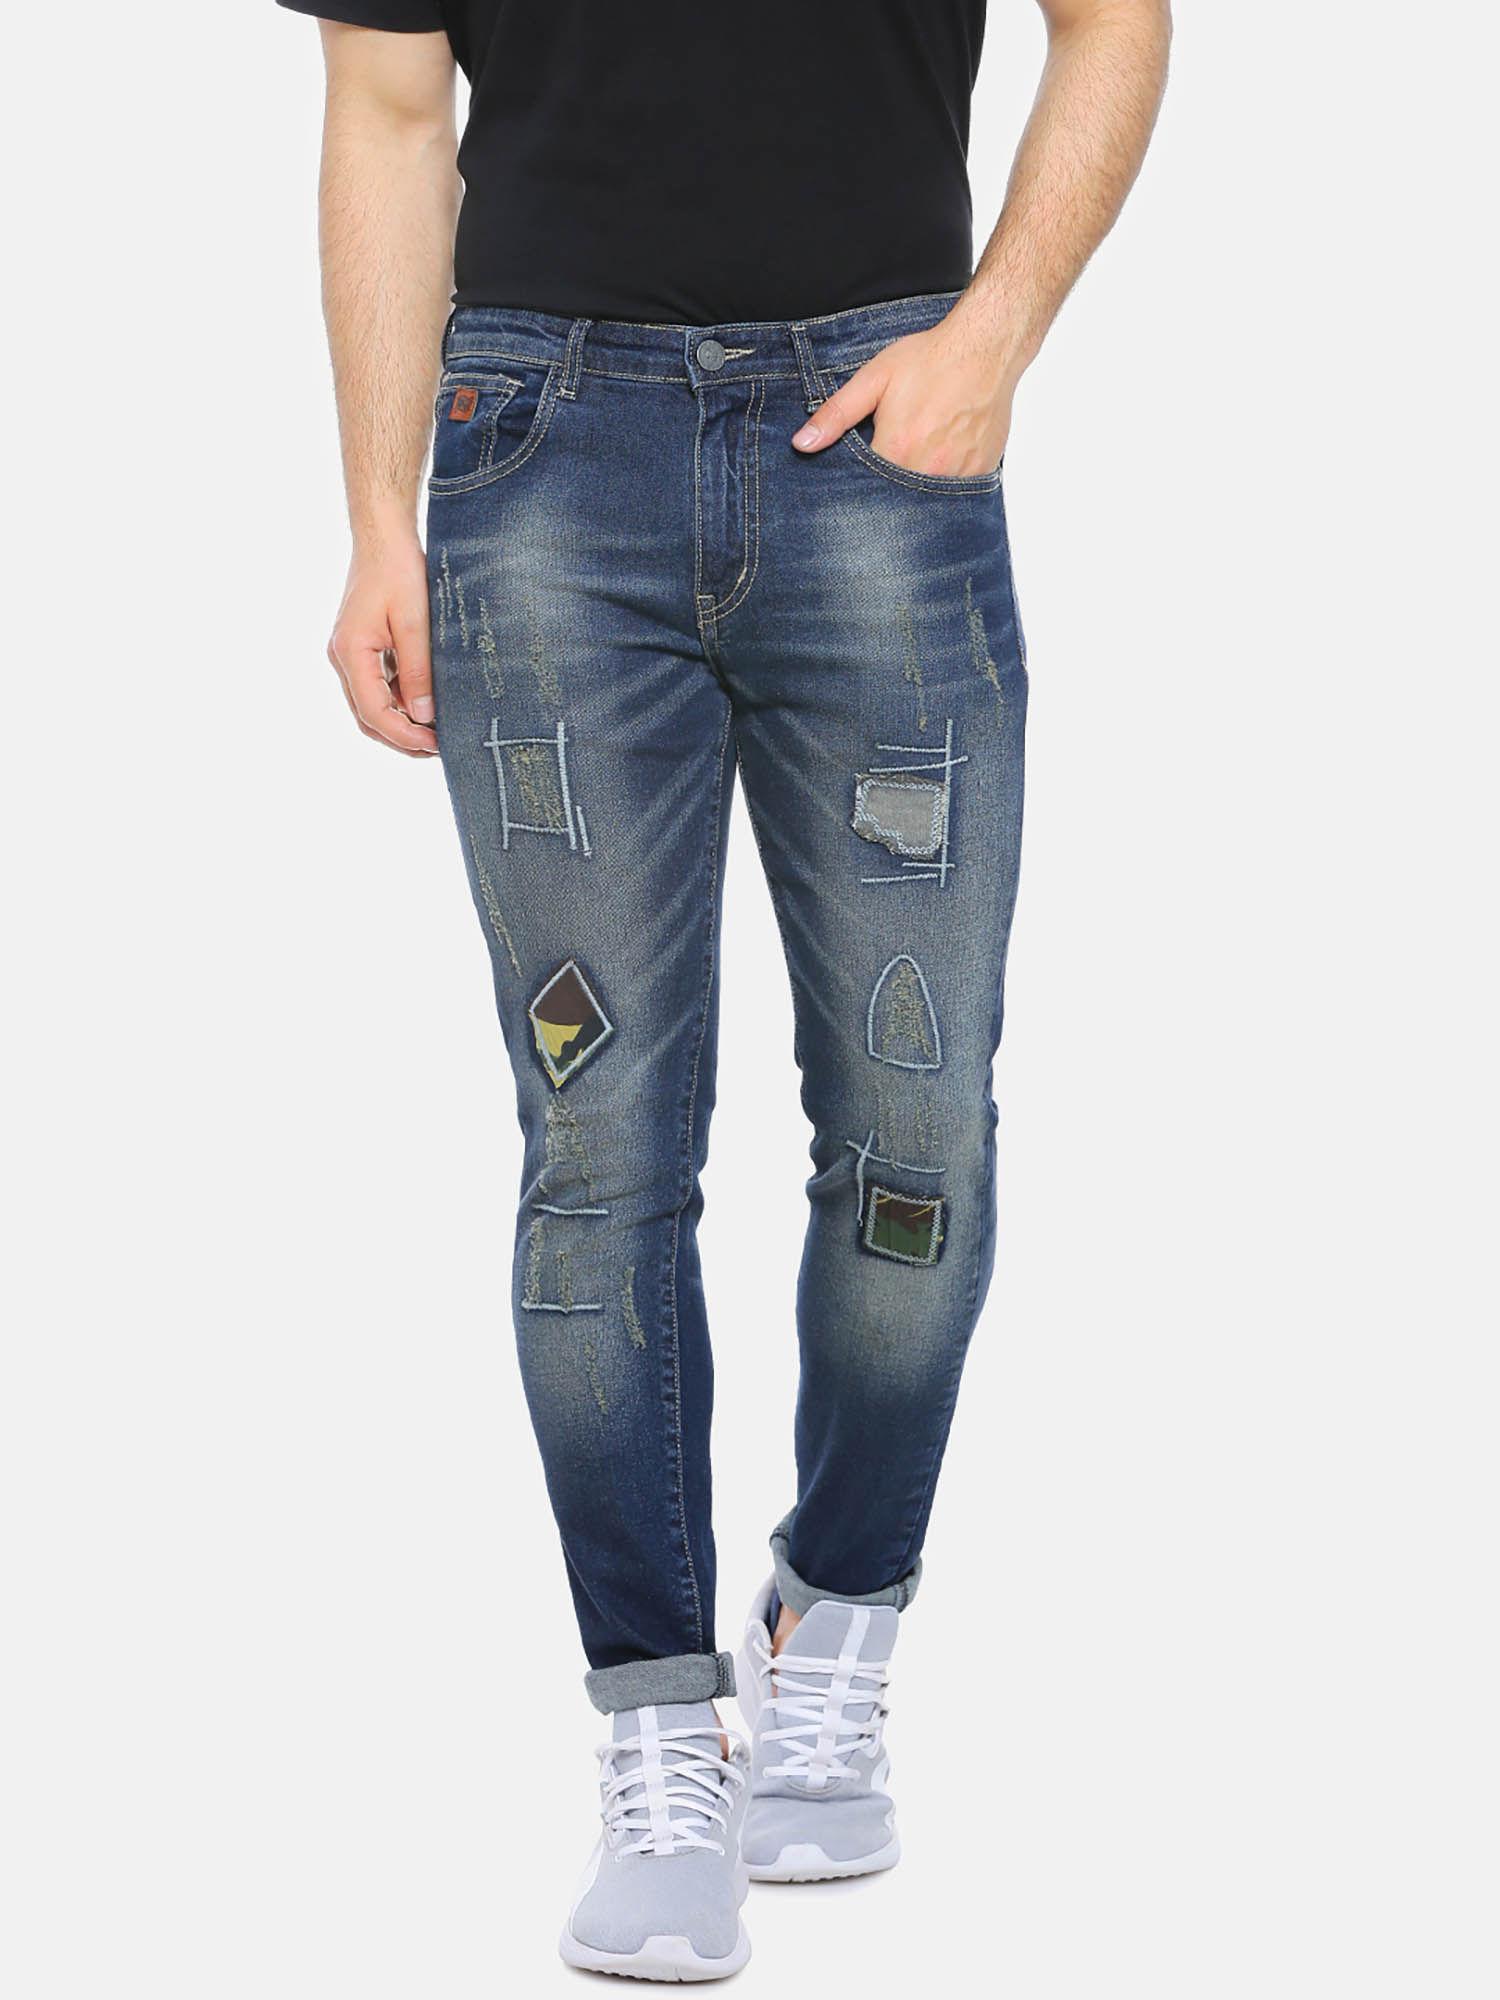 men regular stylish blue jeans